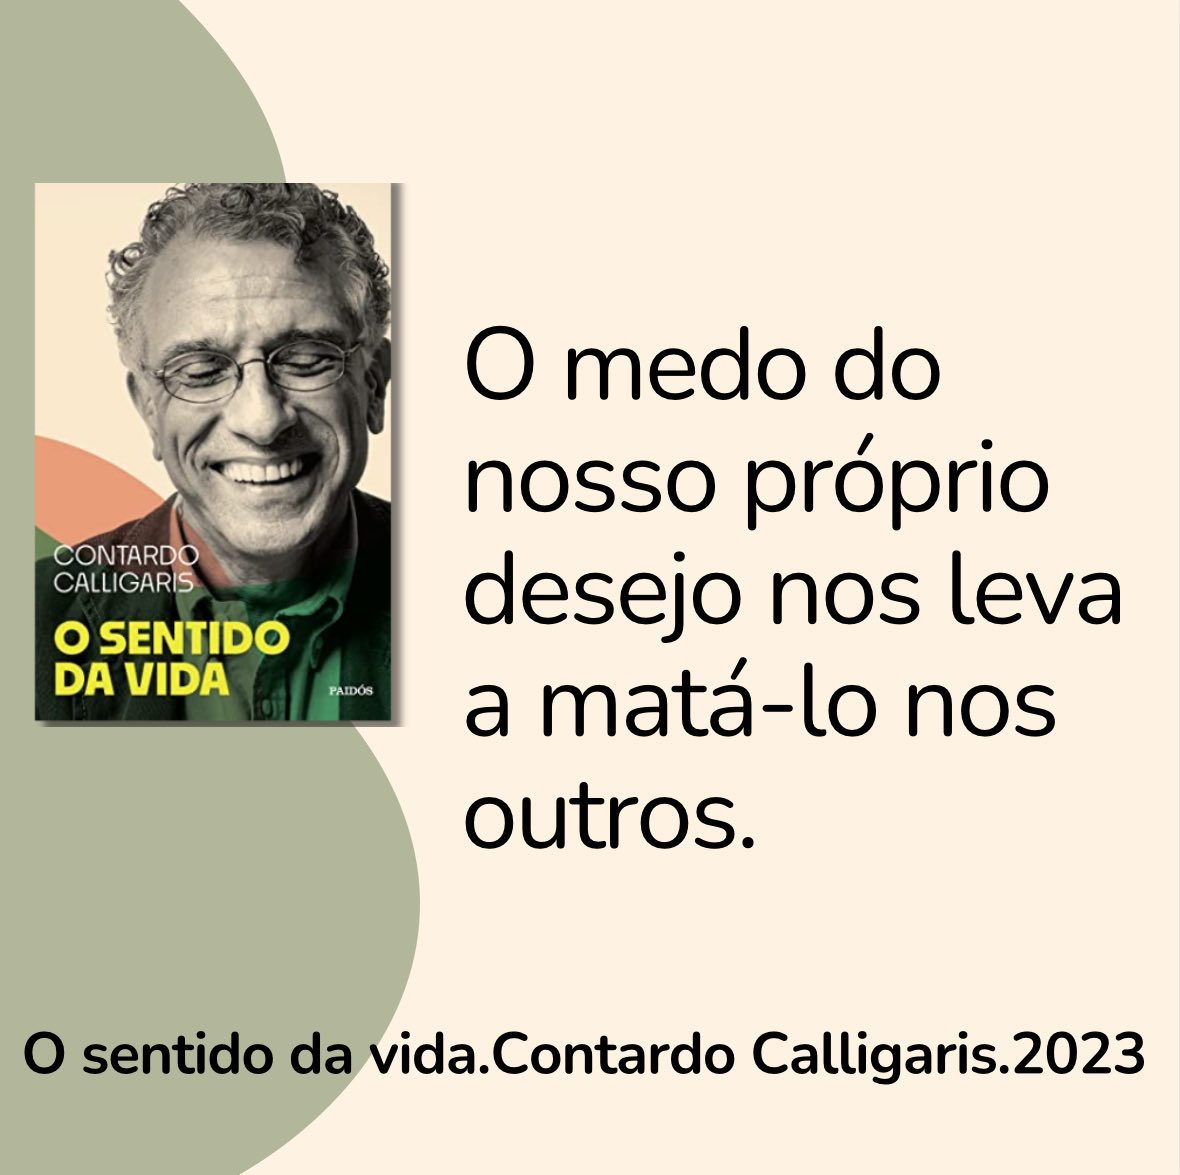 📚O SENTIDO DA VIDA. Contardo Calligaris, 2023.